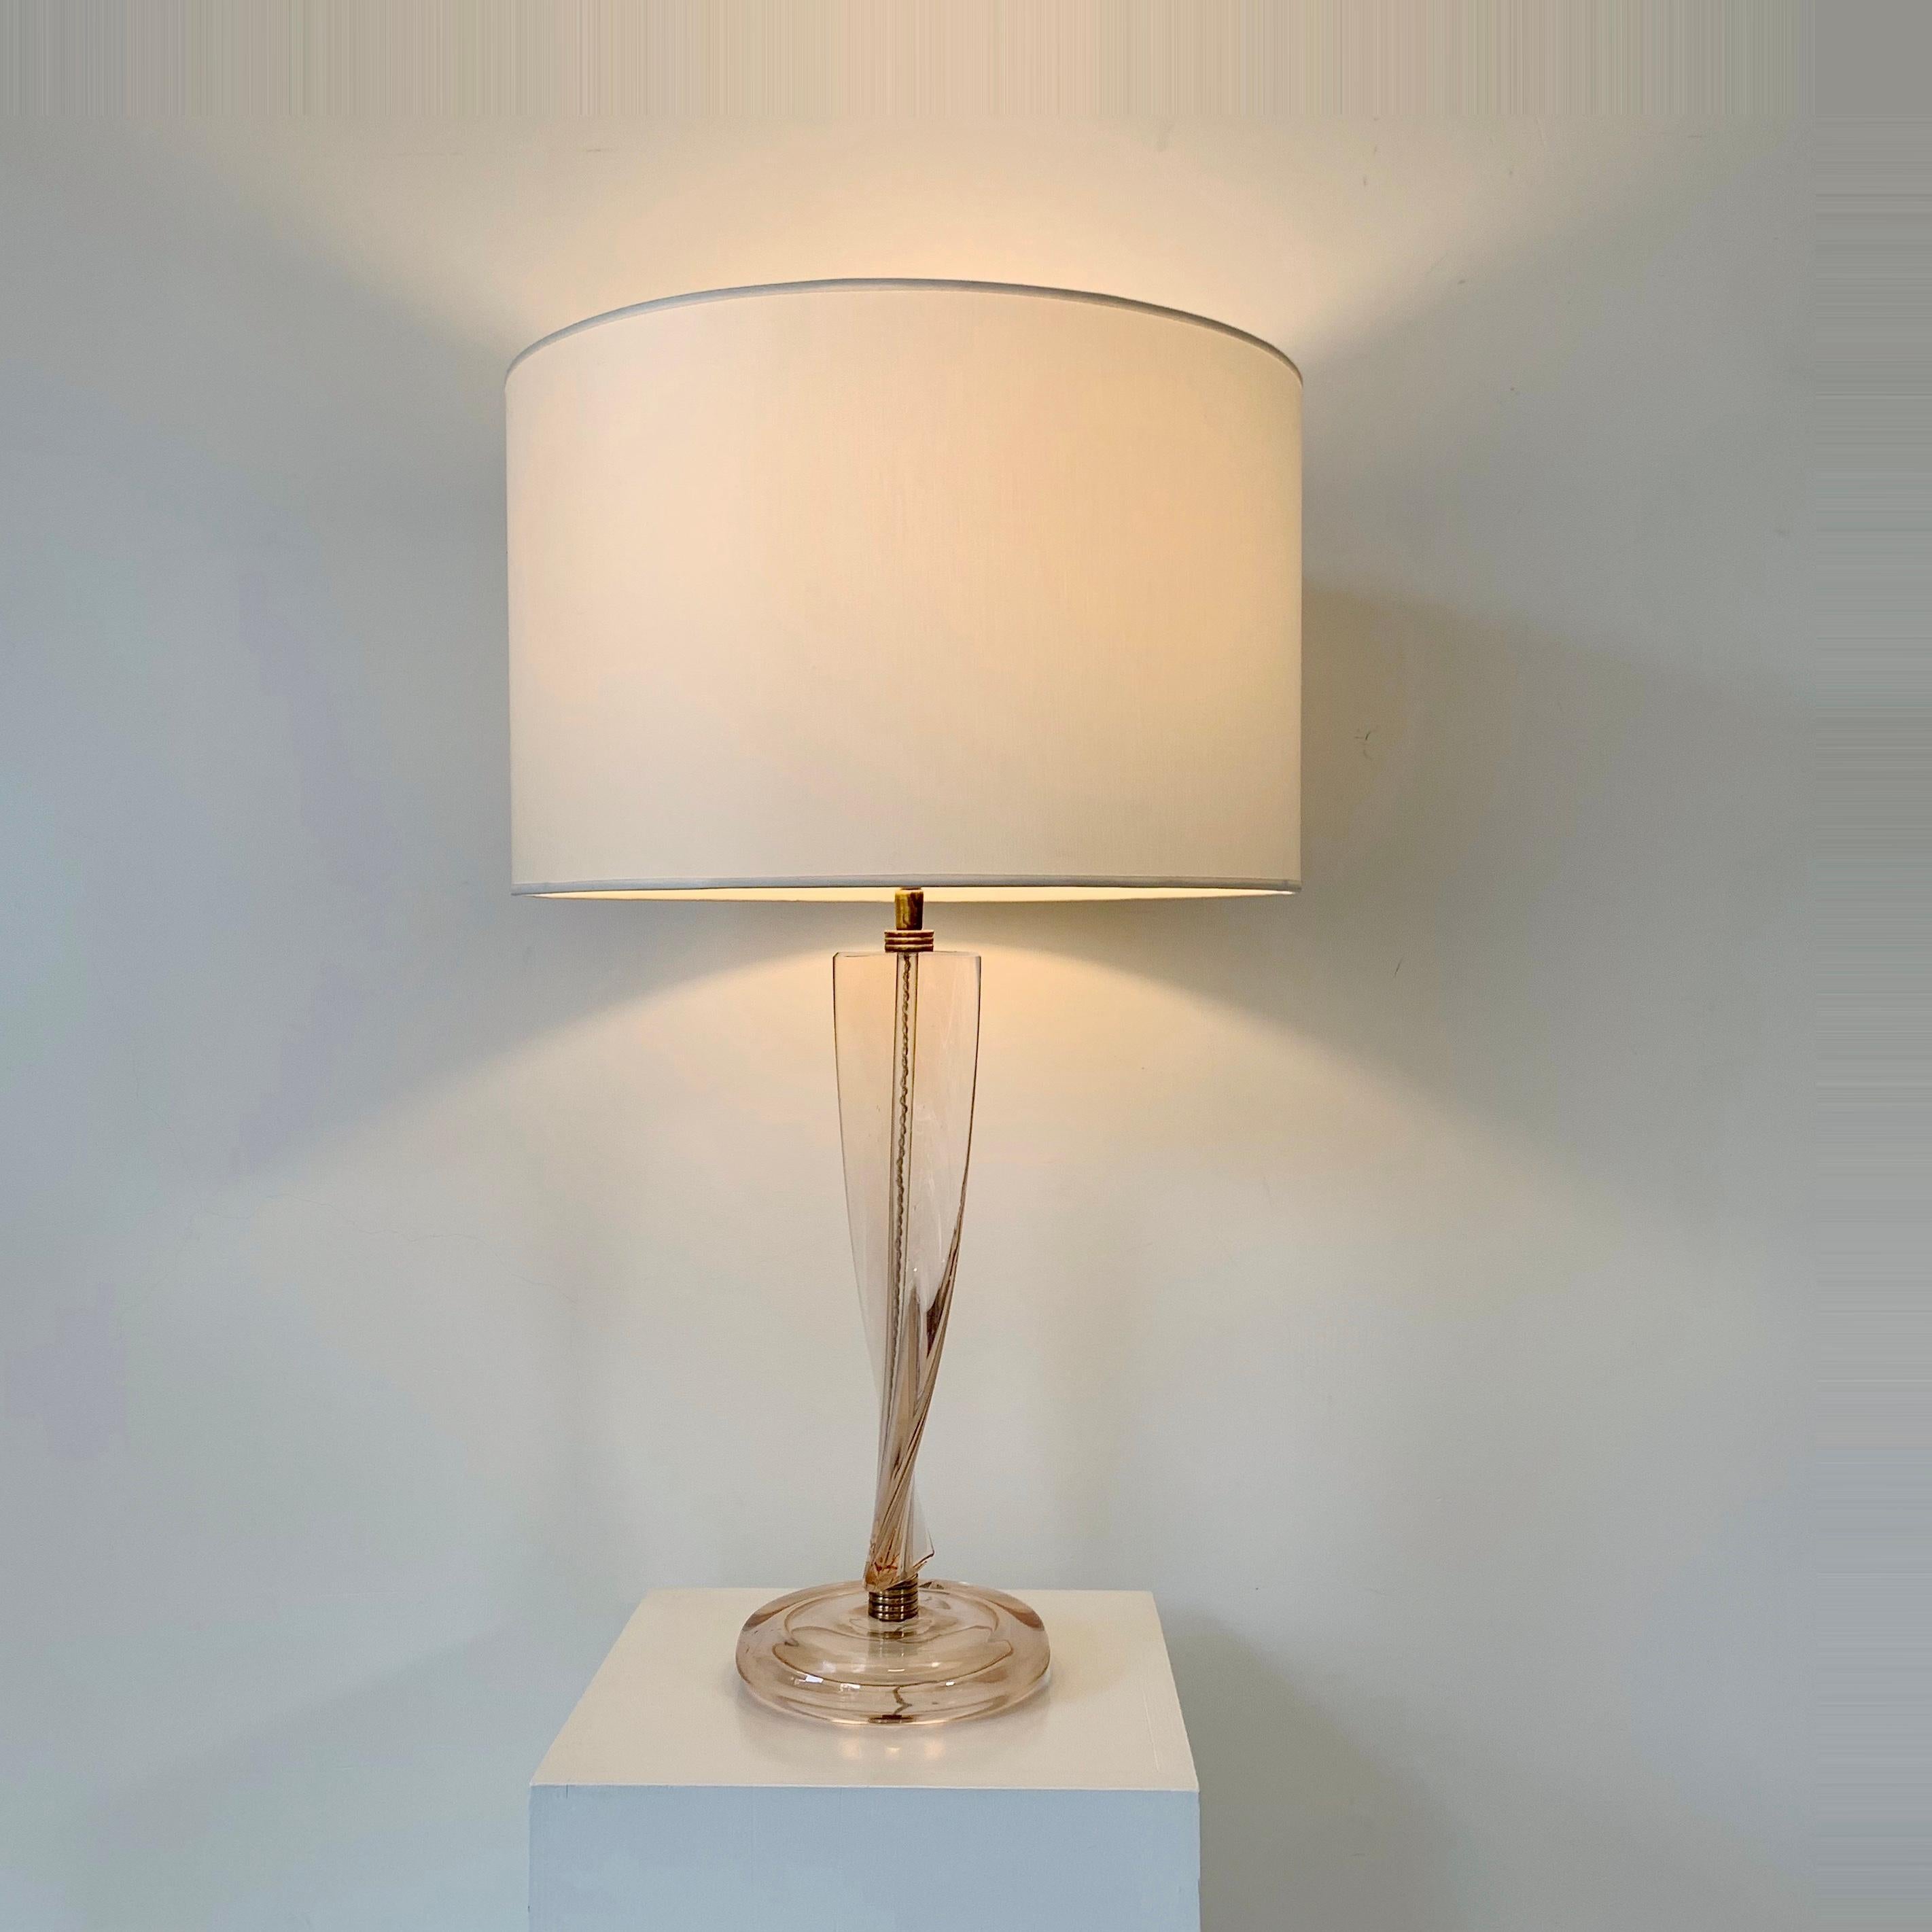 Mid-Century Modern Lampe de table en verre de Murano rose pâle, vers 1950, Italie. en vente